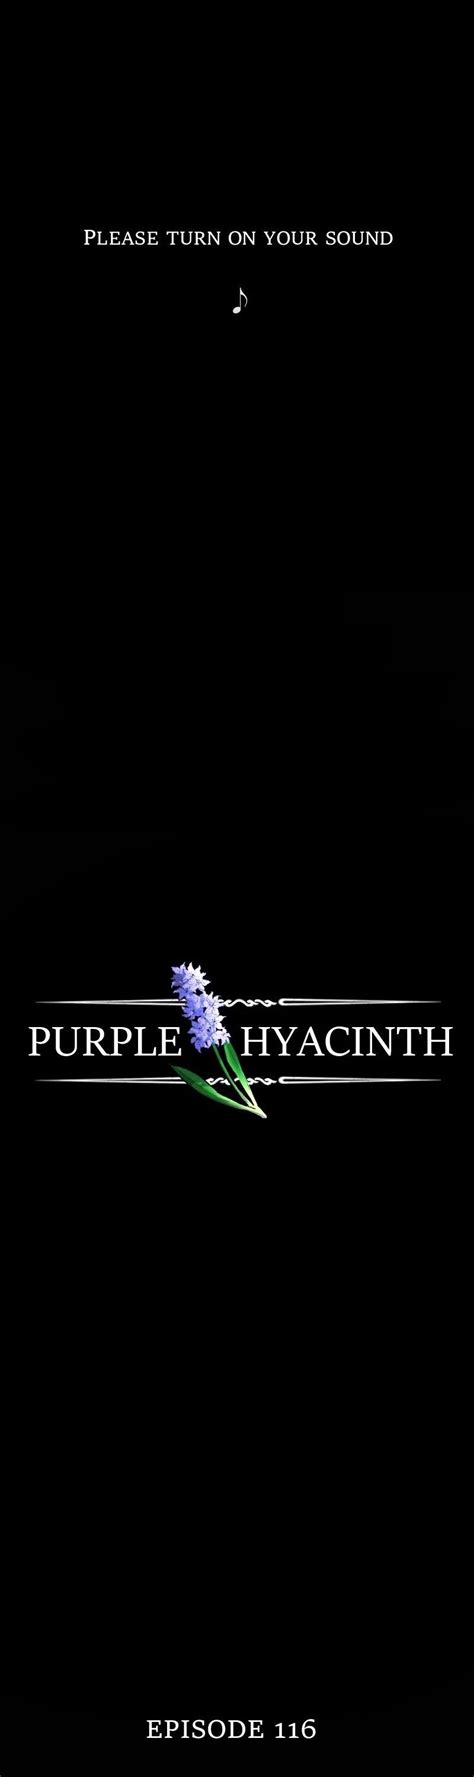 Purple Hyacinth Chapter 120 Enryumanga Manga For All